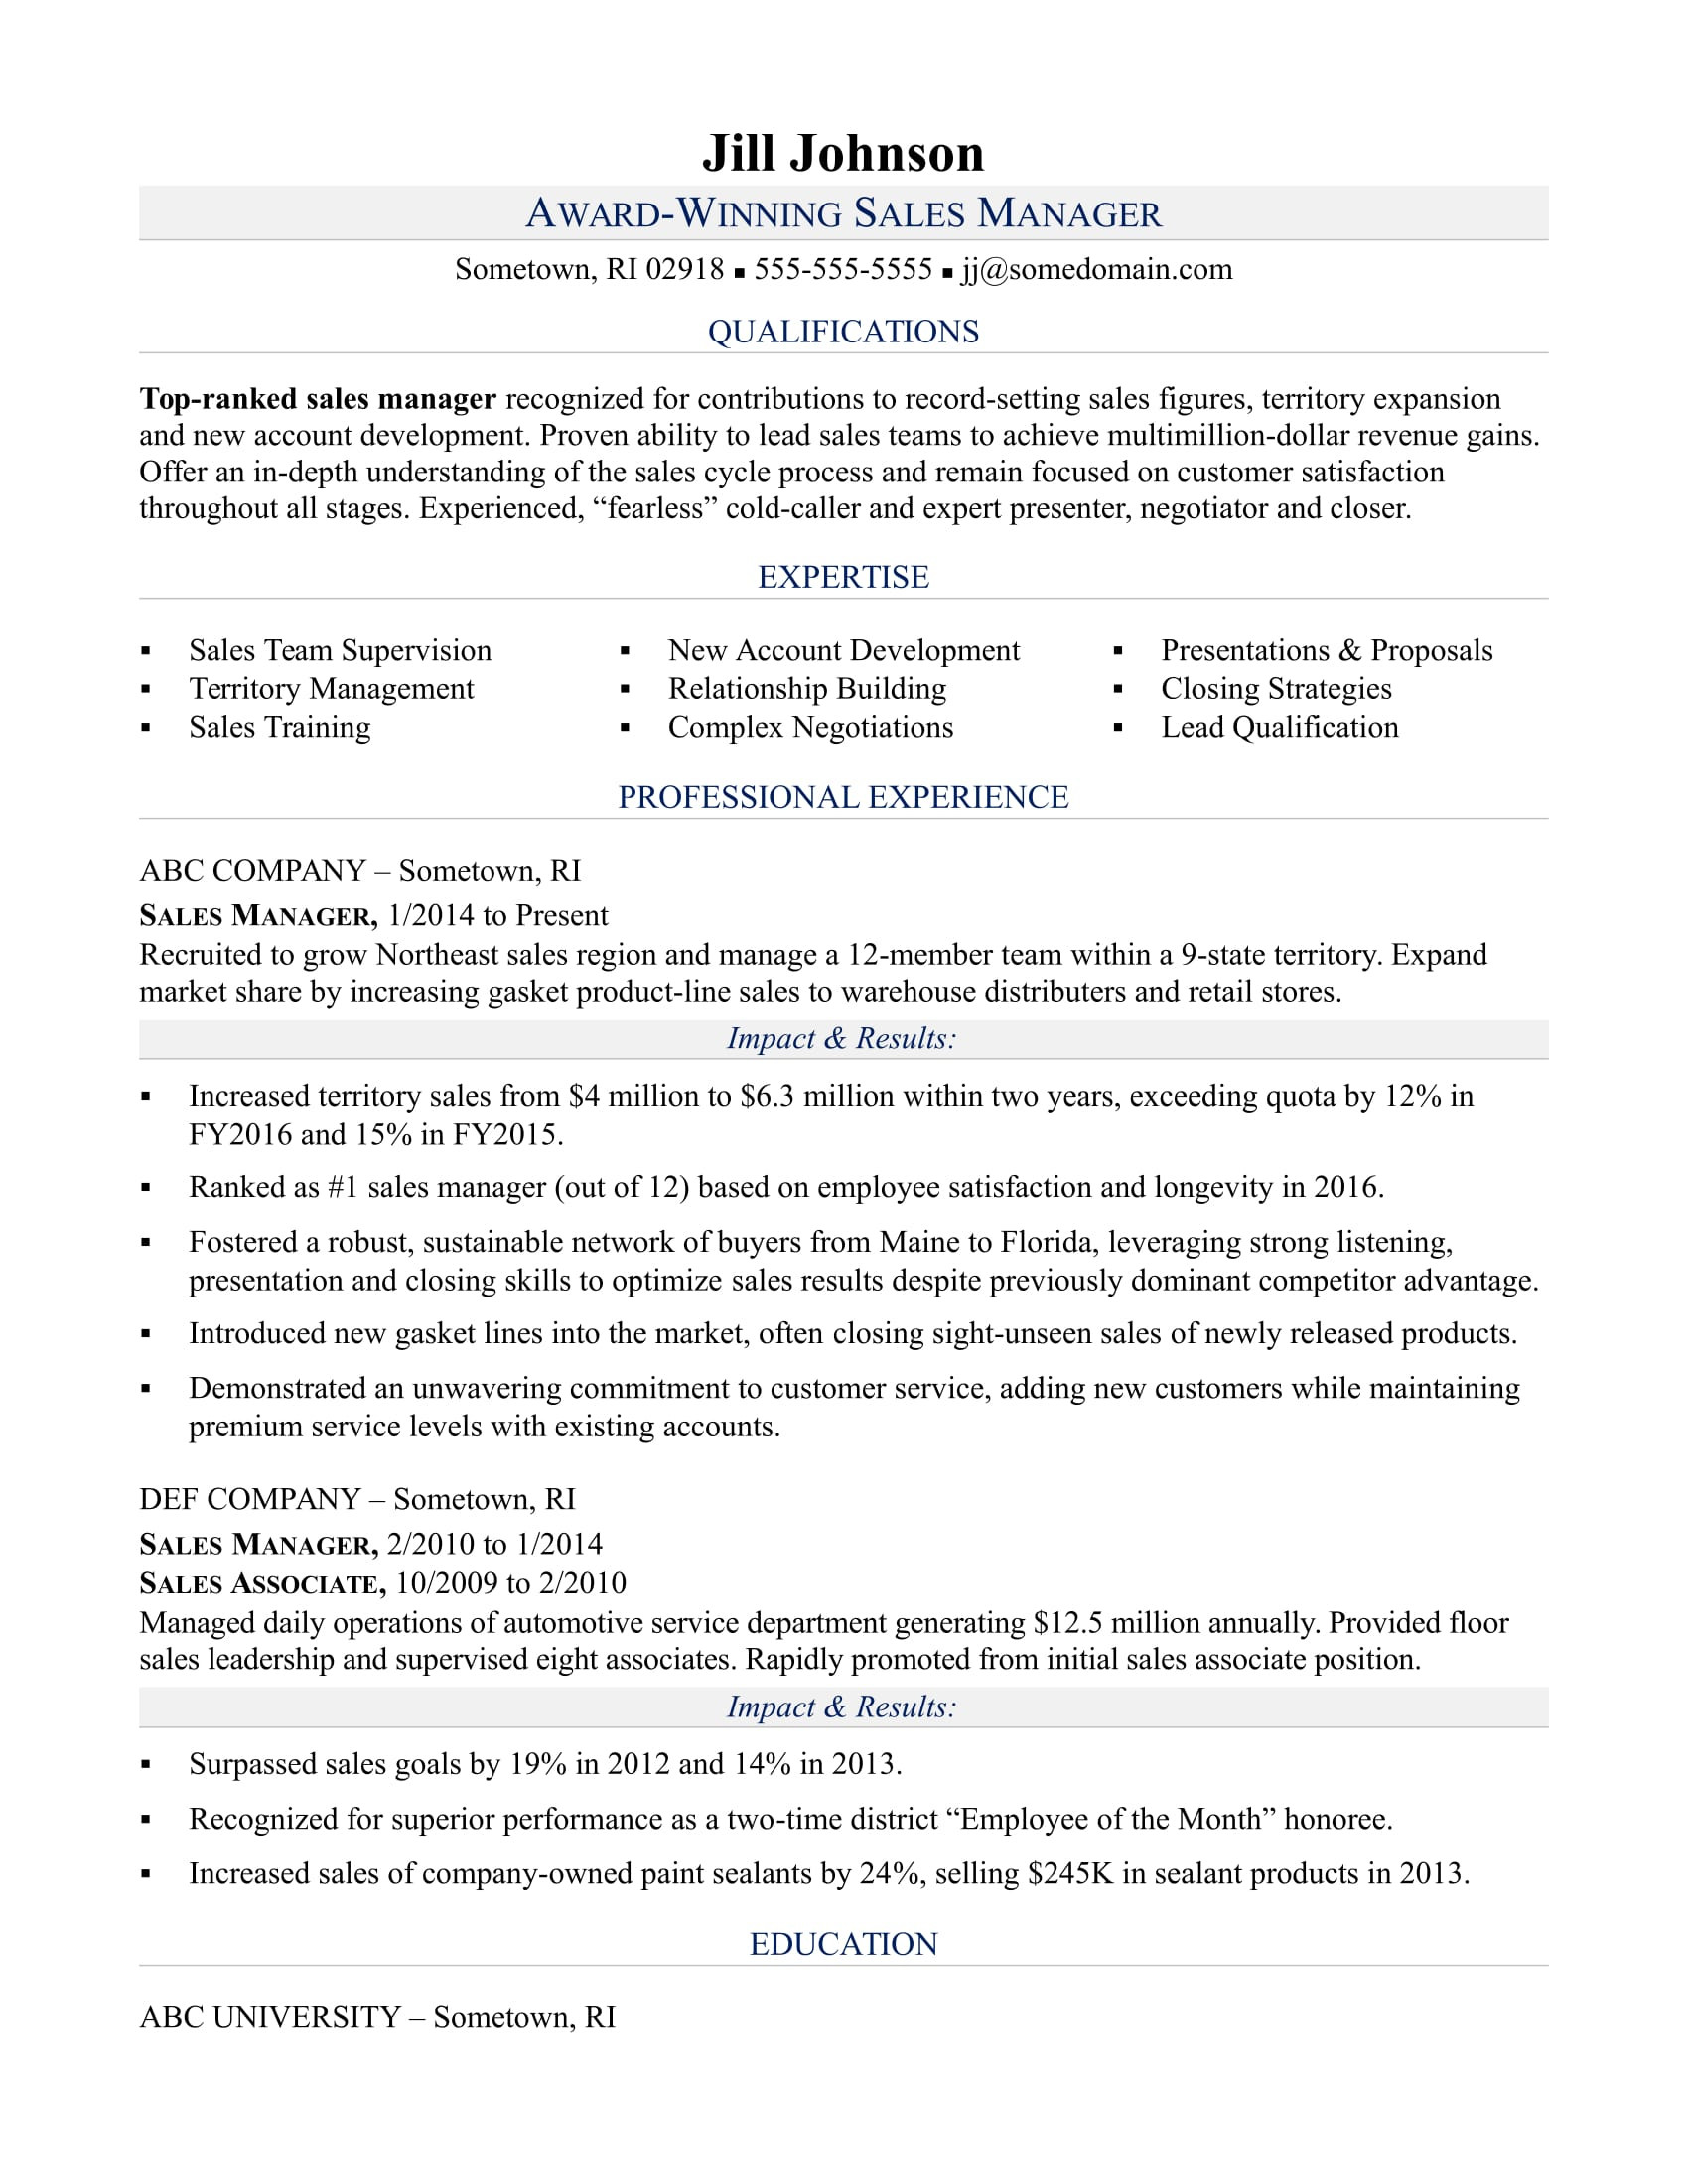 Sample Resume for Vp Of Sales and Marketing Sales Manager Resume Sample Monster.com